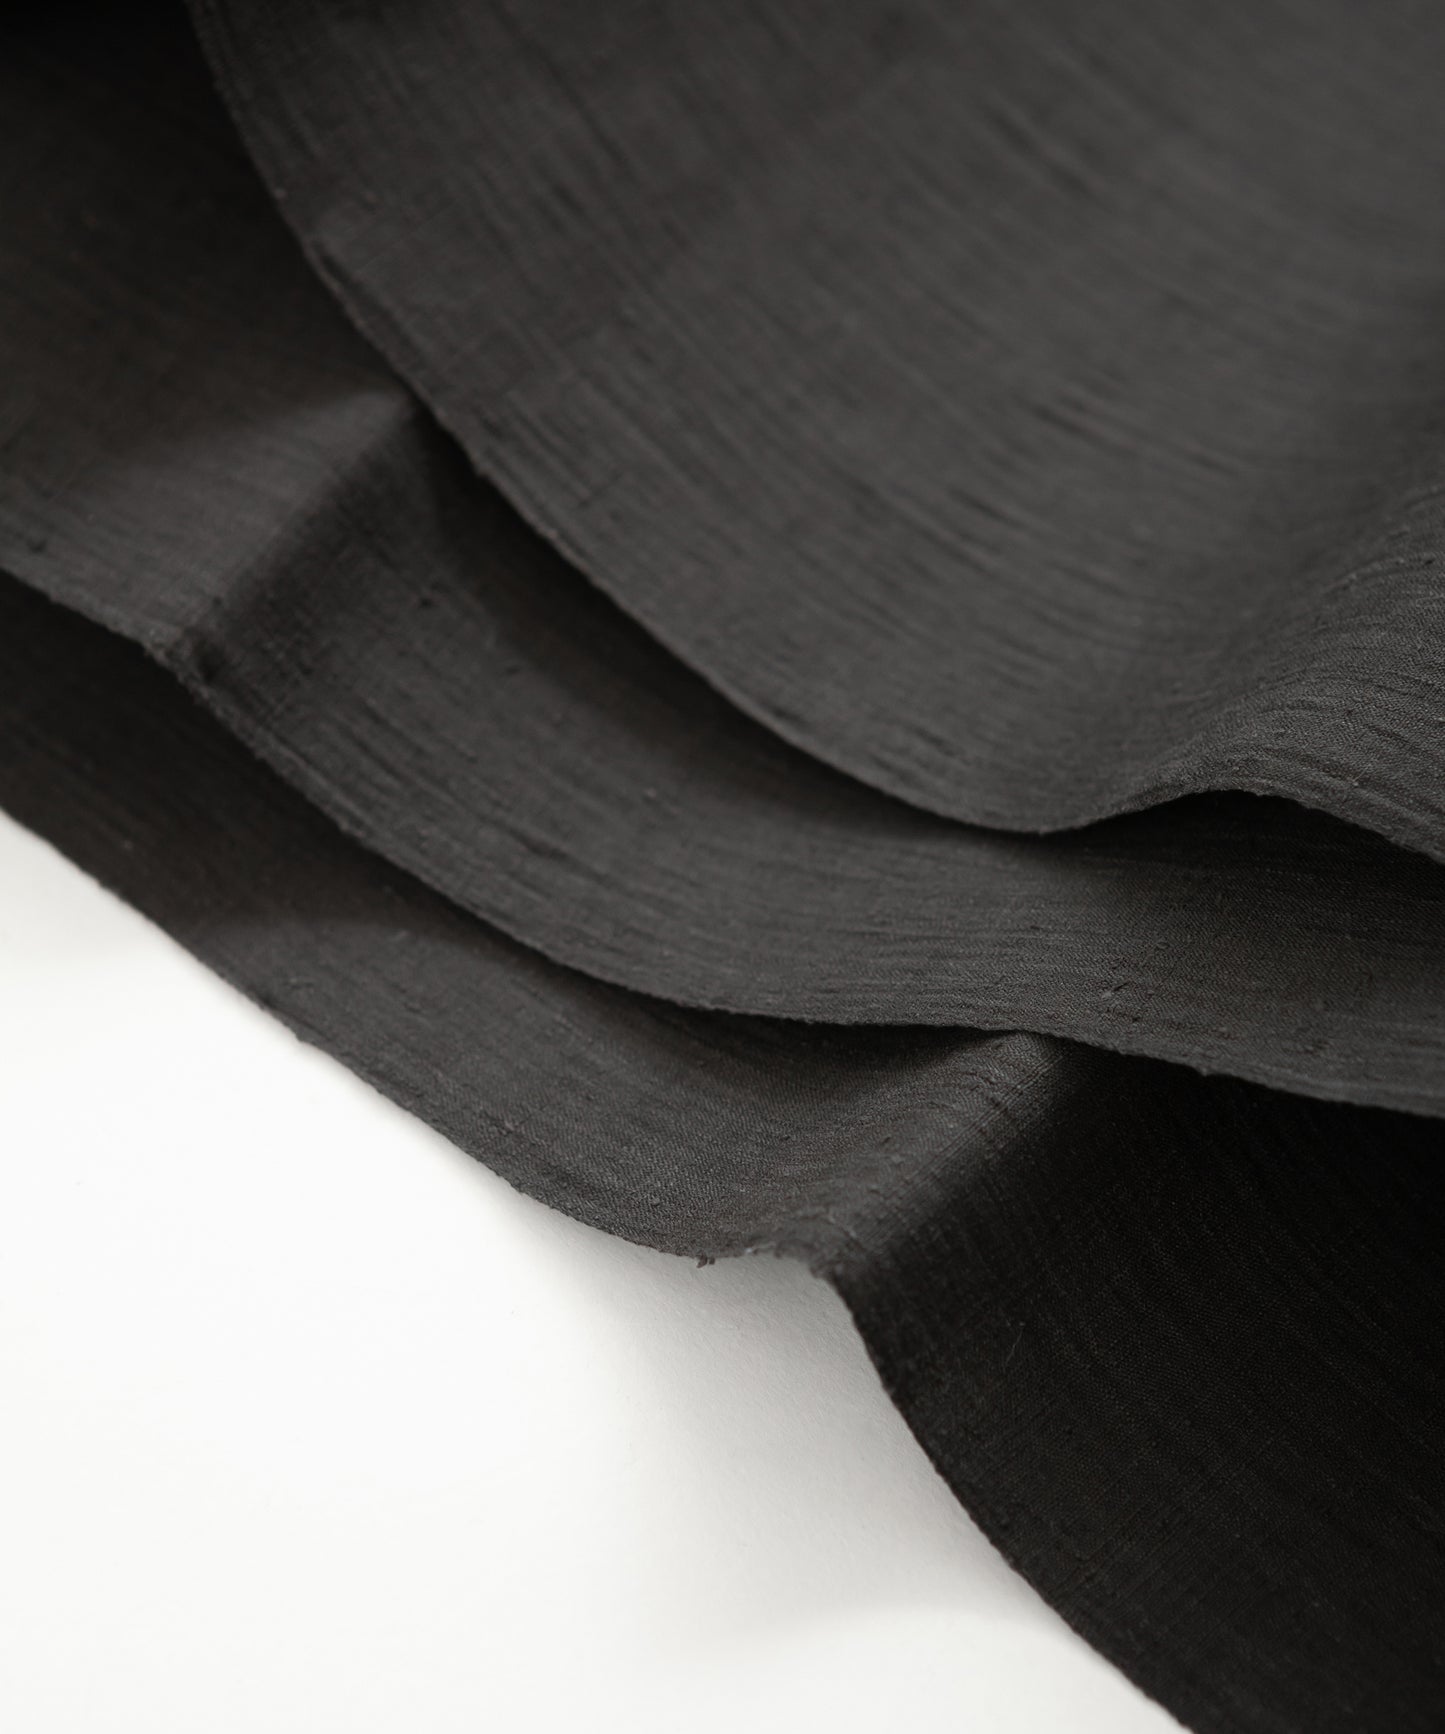 Authentique Yuuki Tsumugi Shizuori (tissu de fond) Sumi couleur unie noir